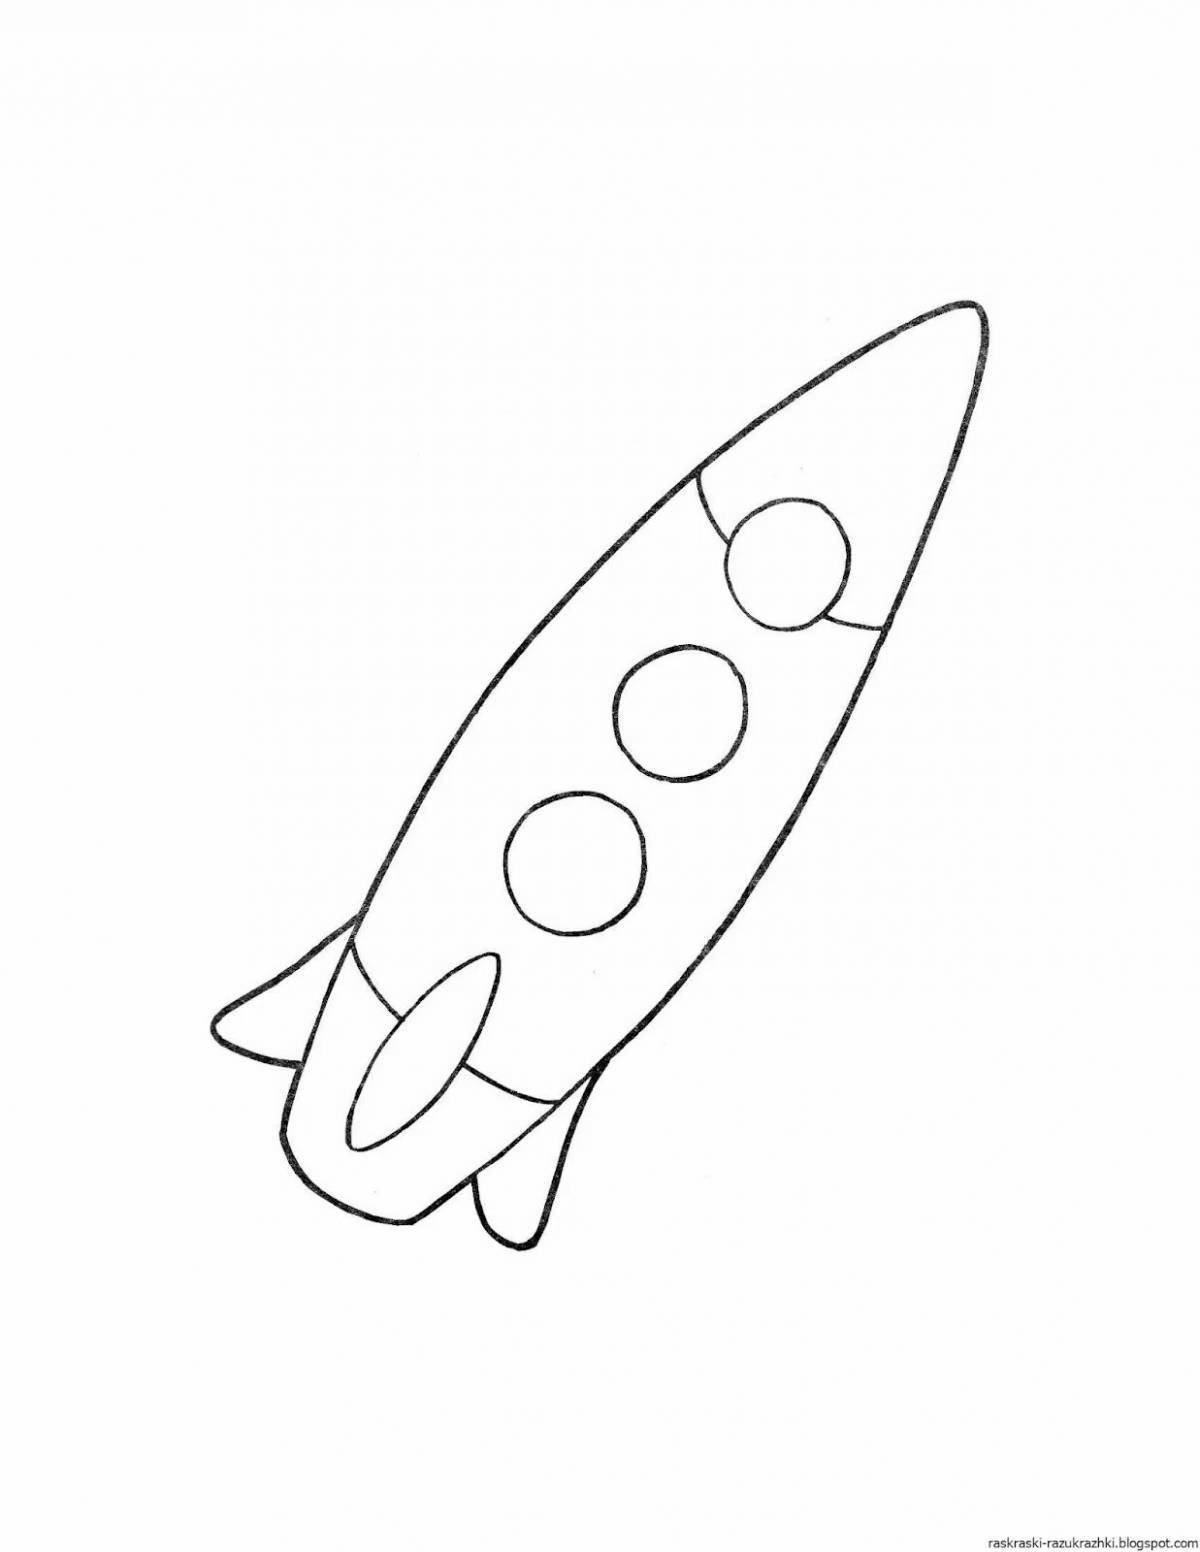 Изысканная раскраска ракеты для детей